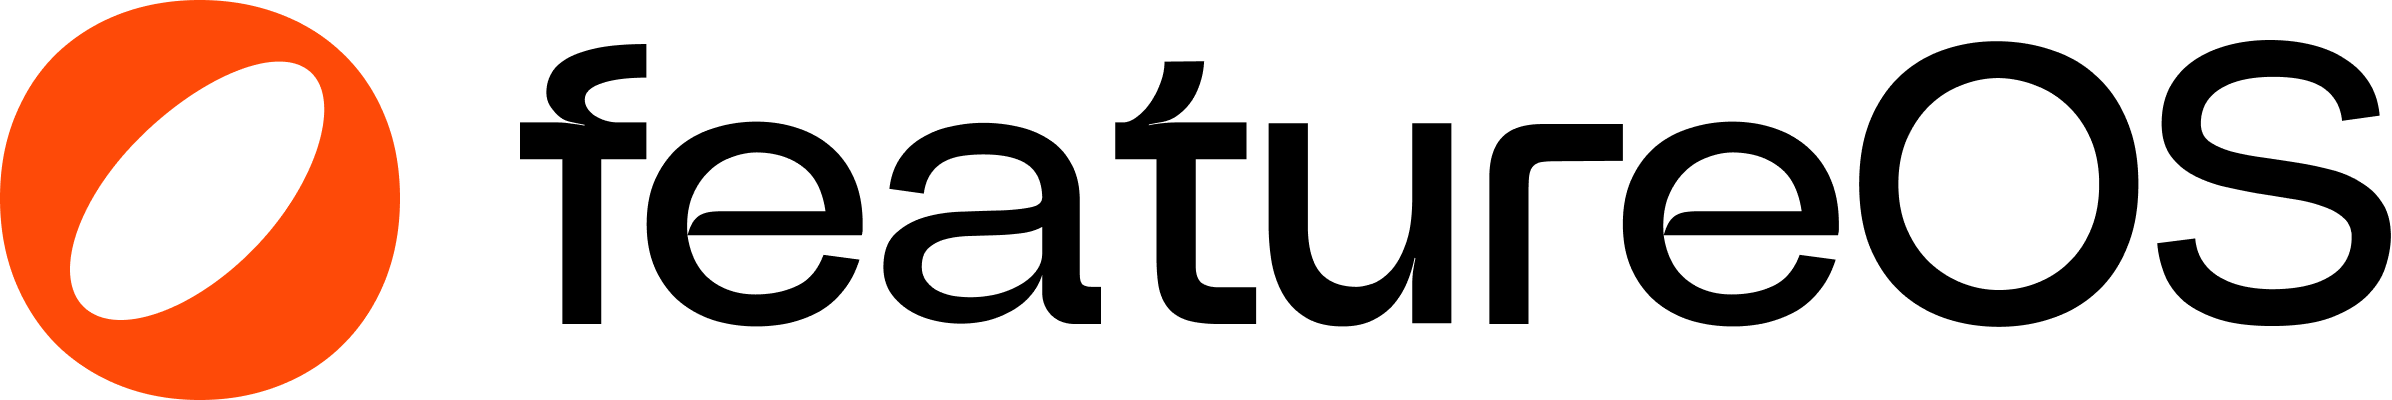 featureOS logo